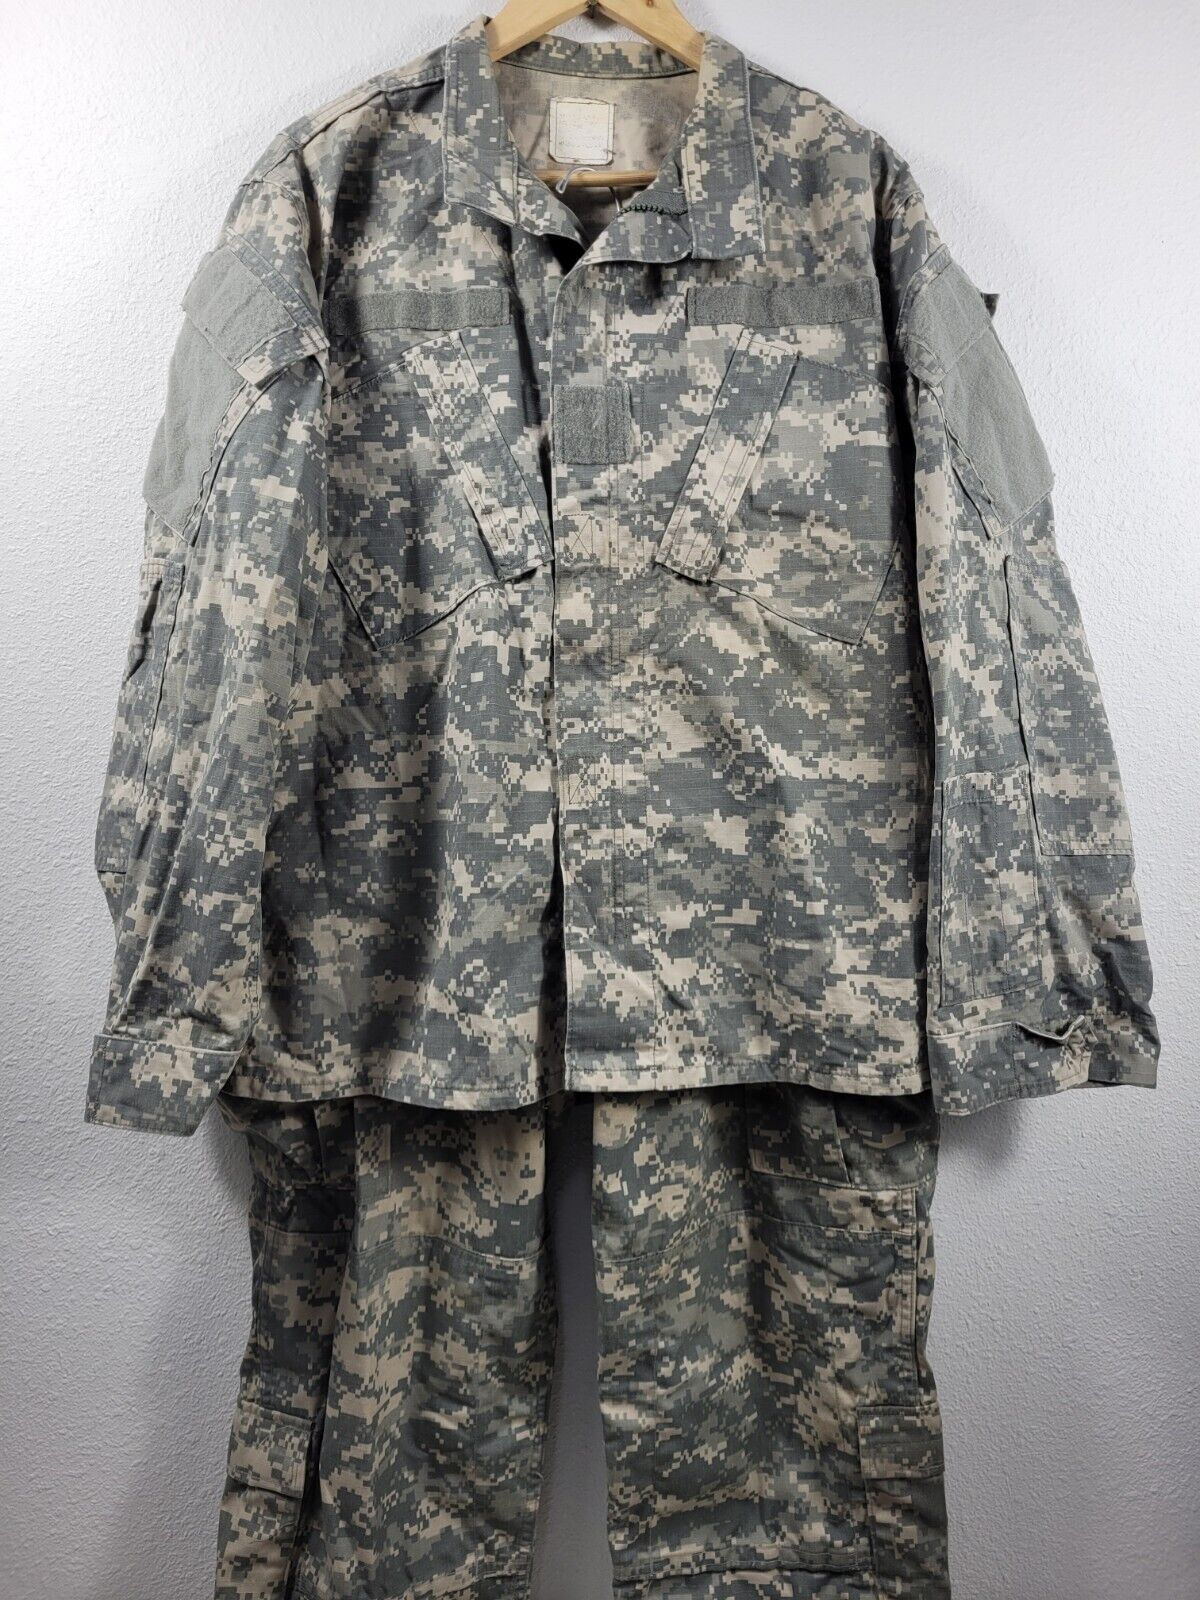 Bluewater Defense Medium Regular Uniform Set Unisex US Army ACU Pattern Camo UCP